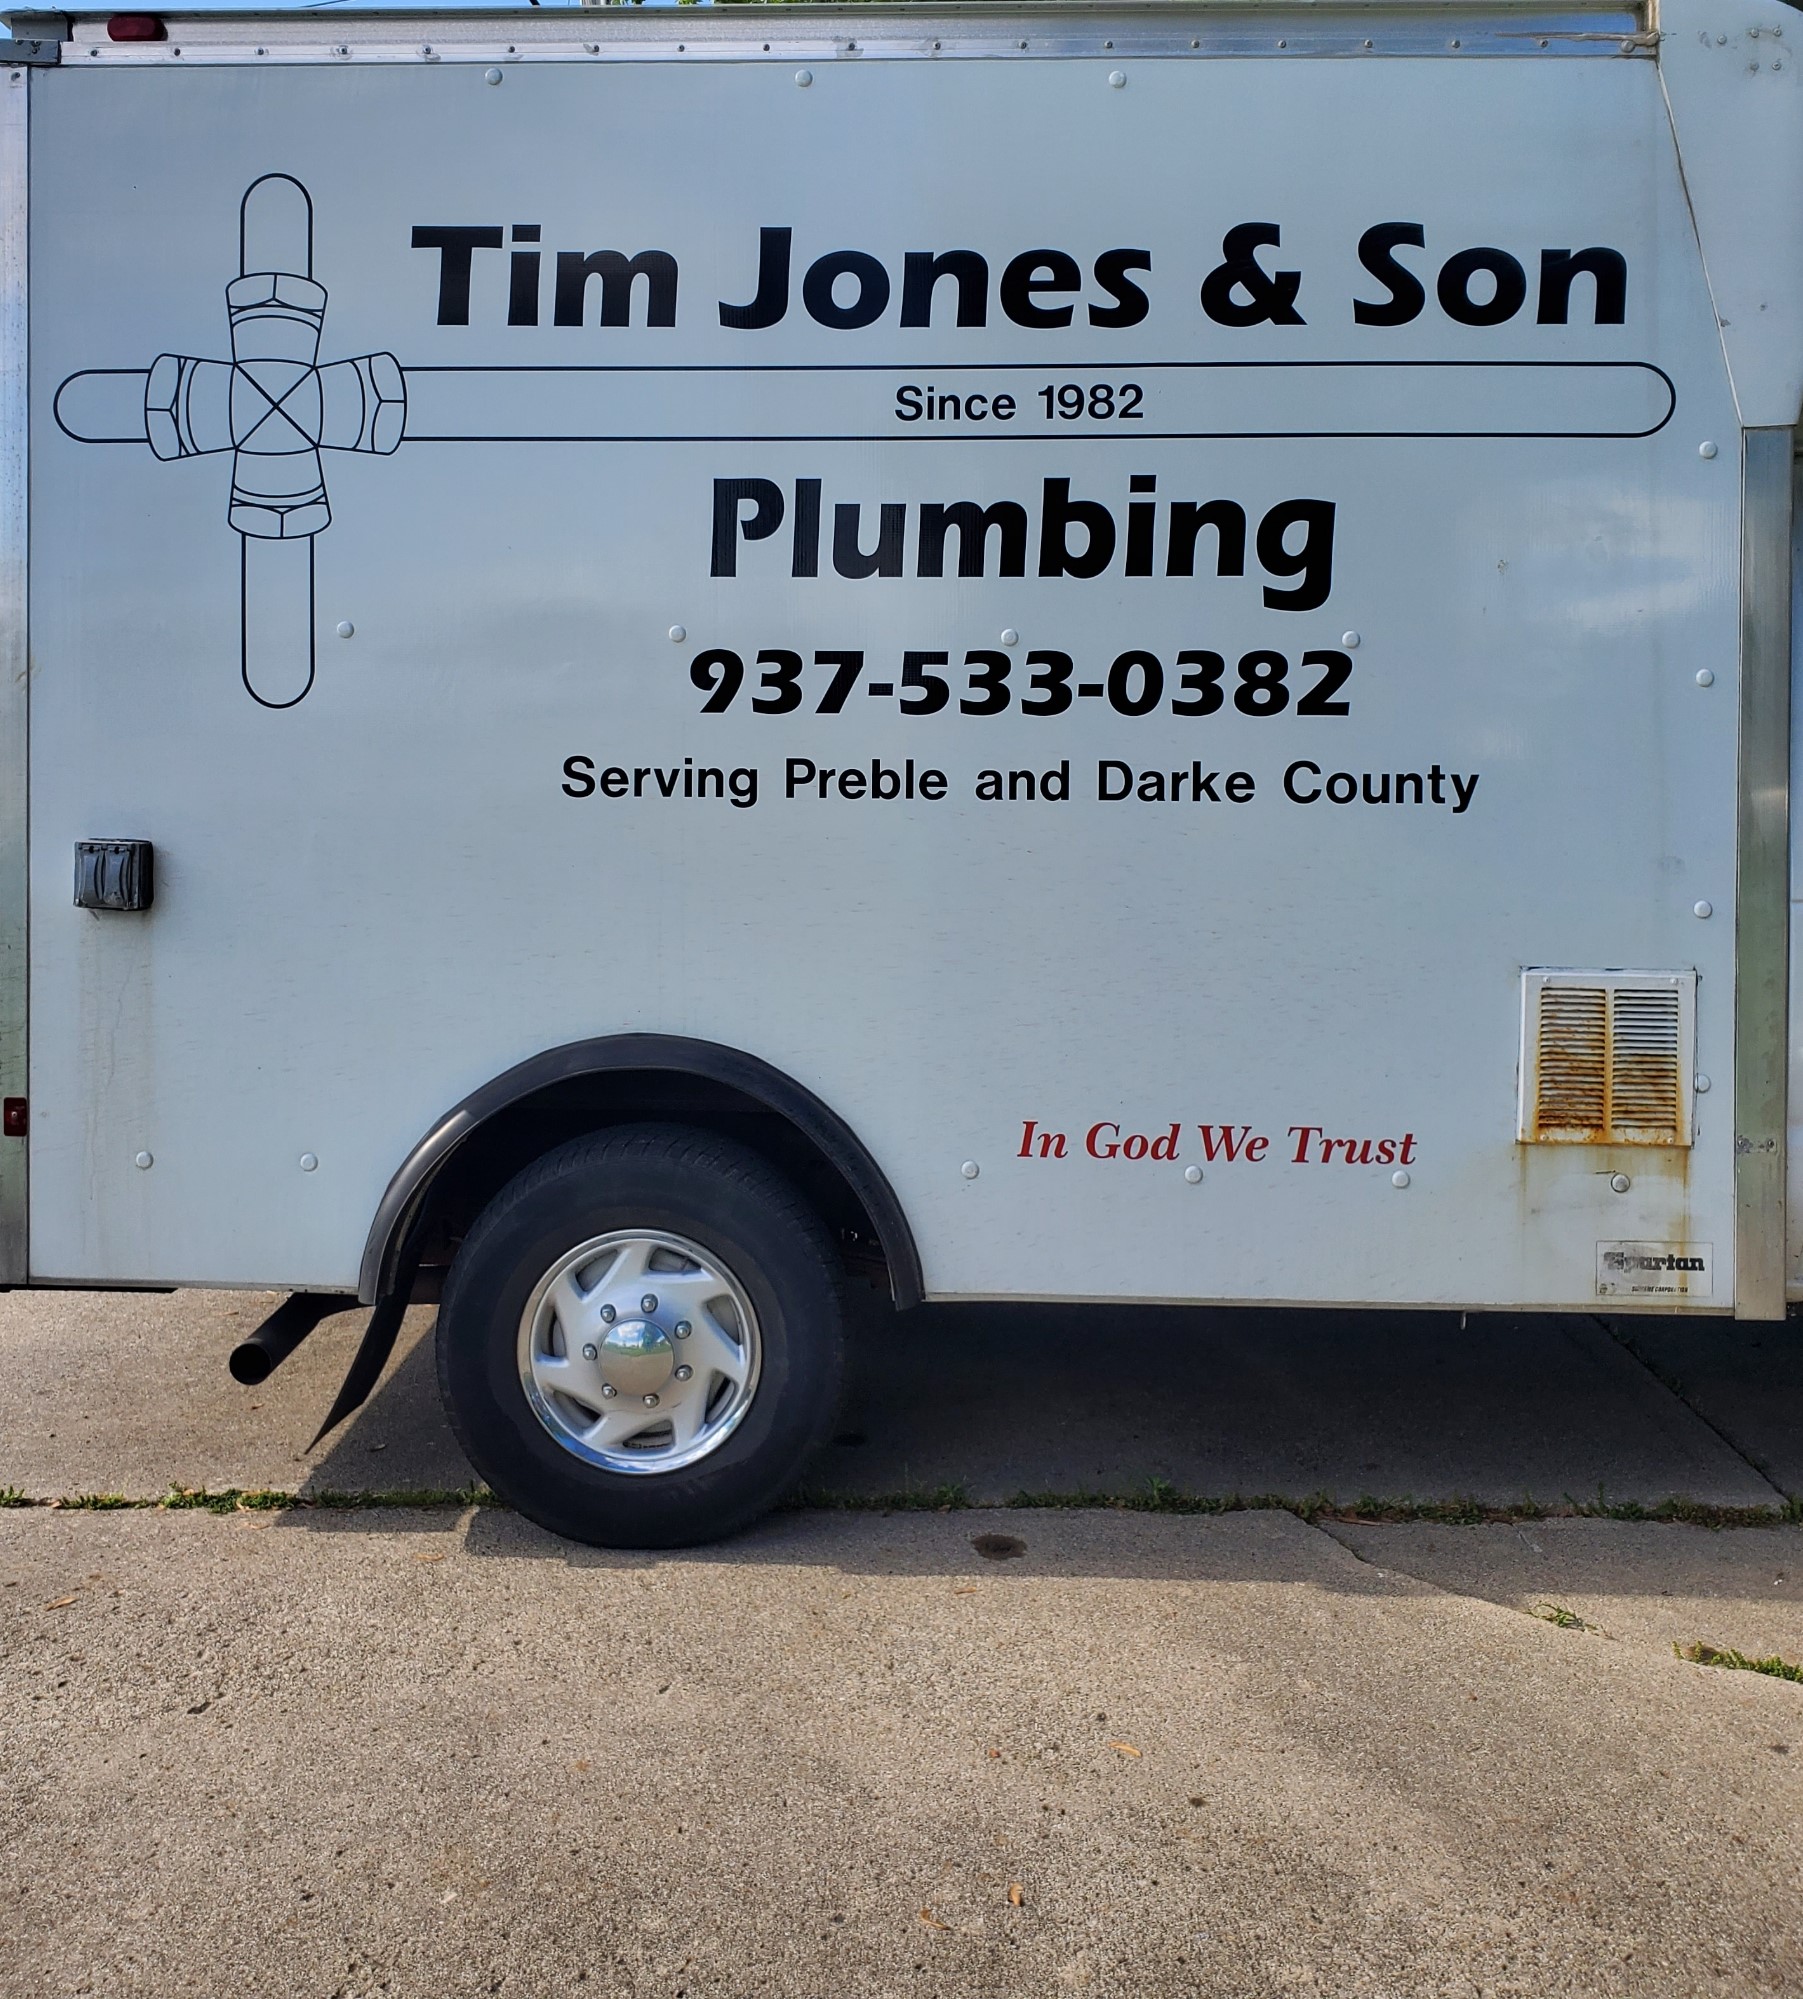 Tim Jones and Son Plumbing